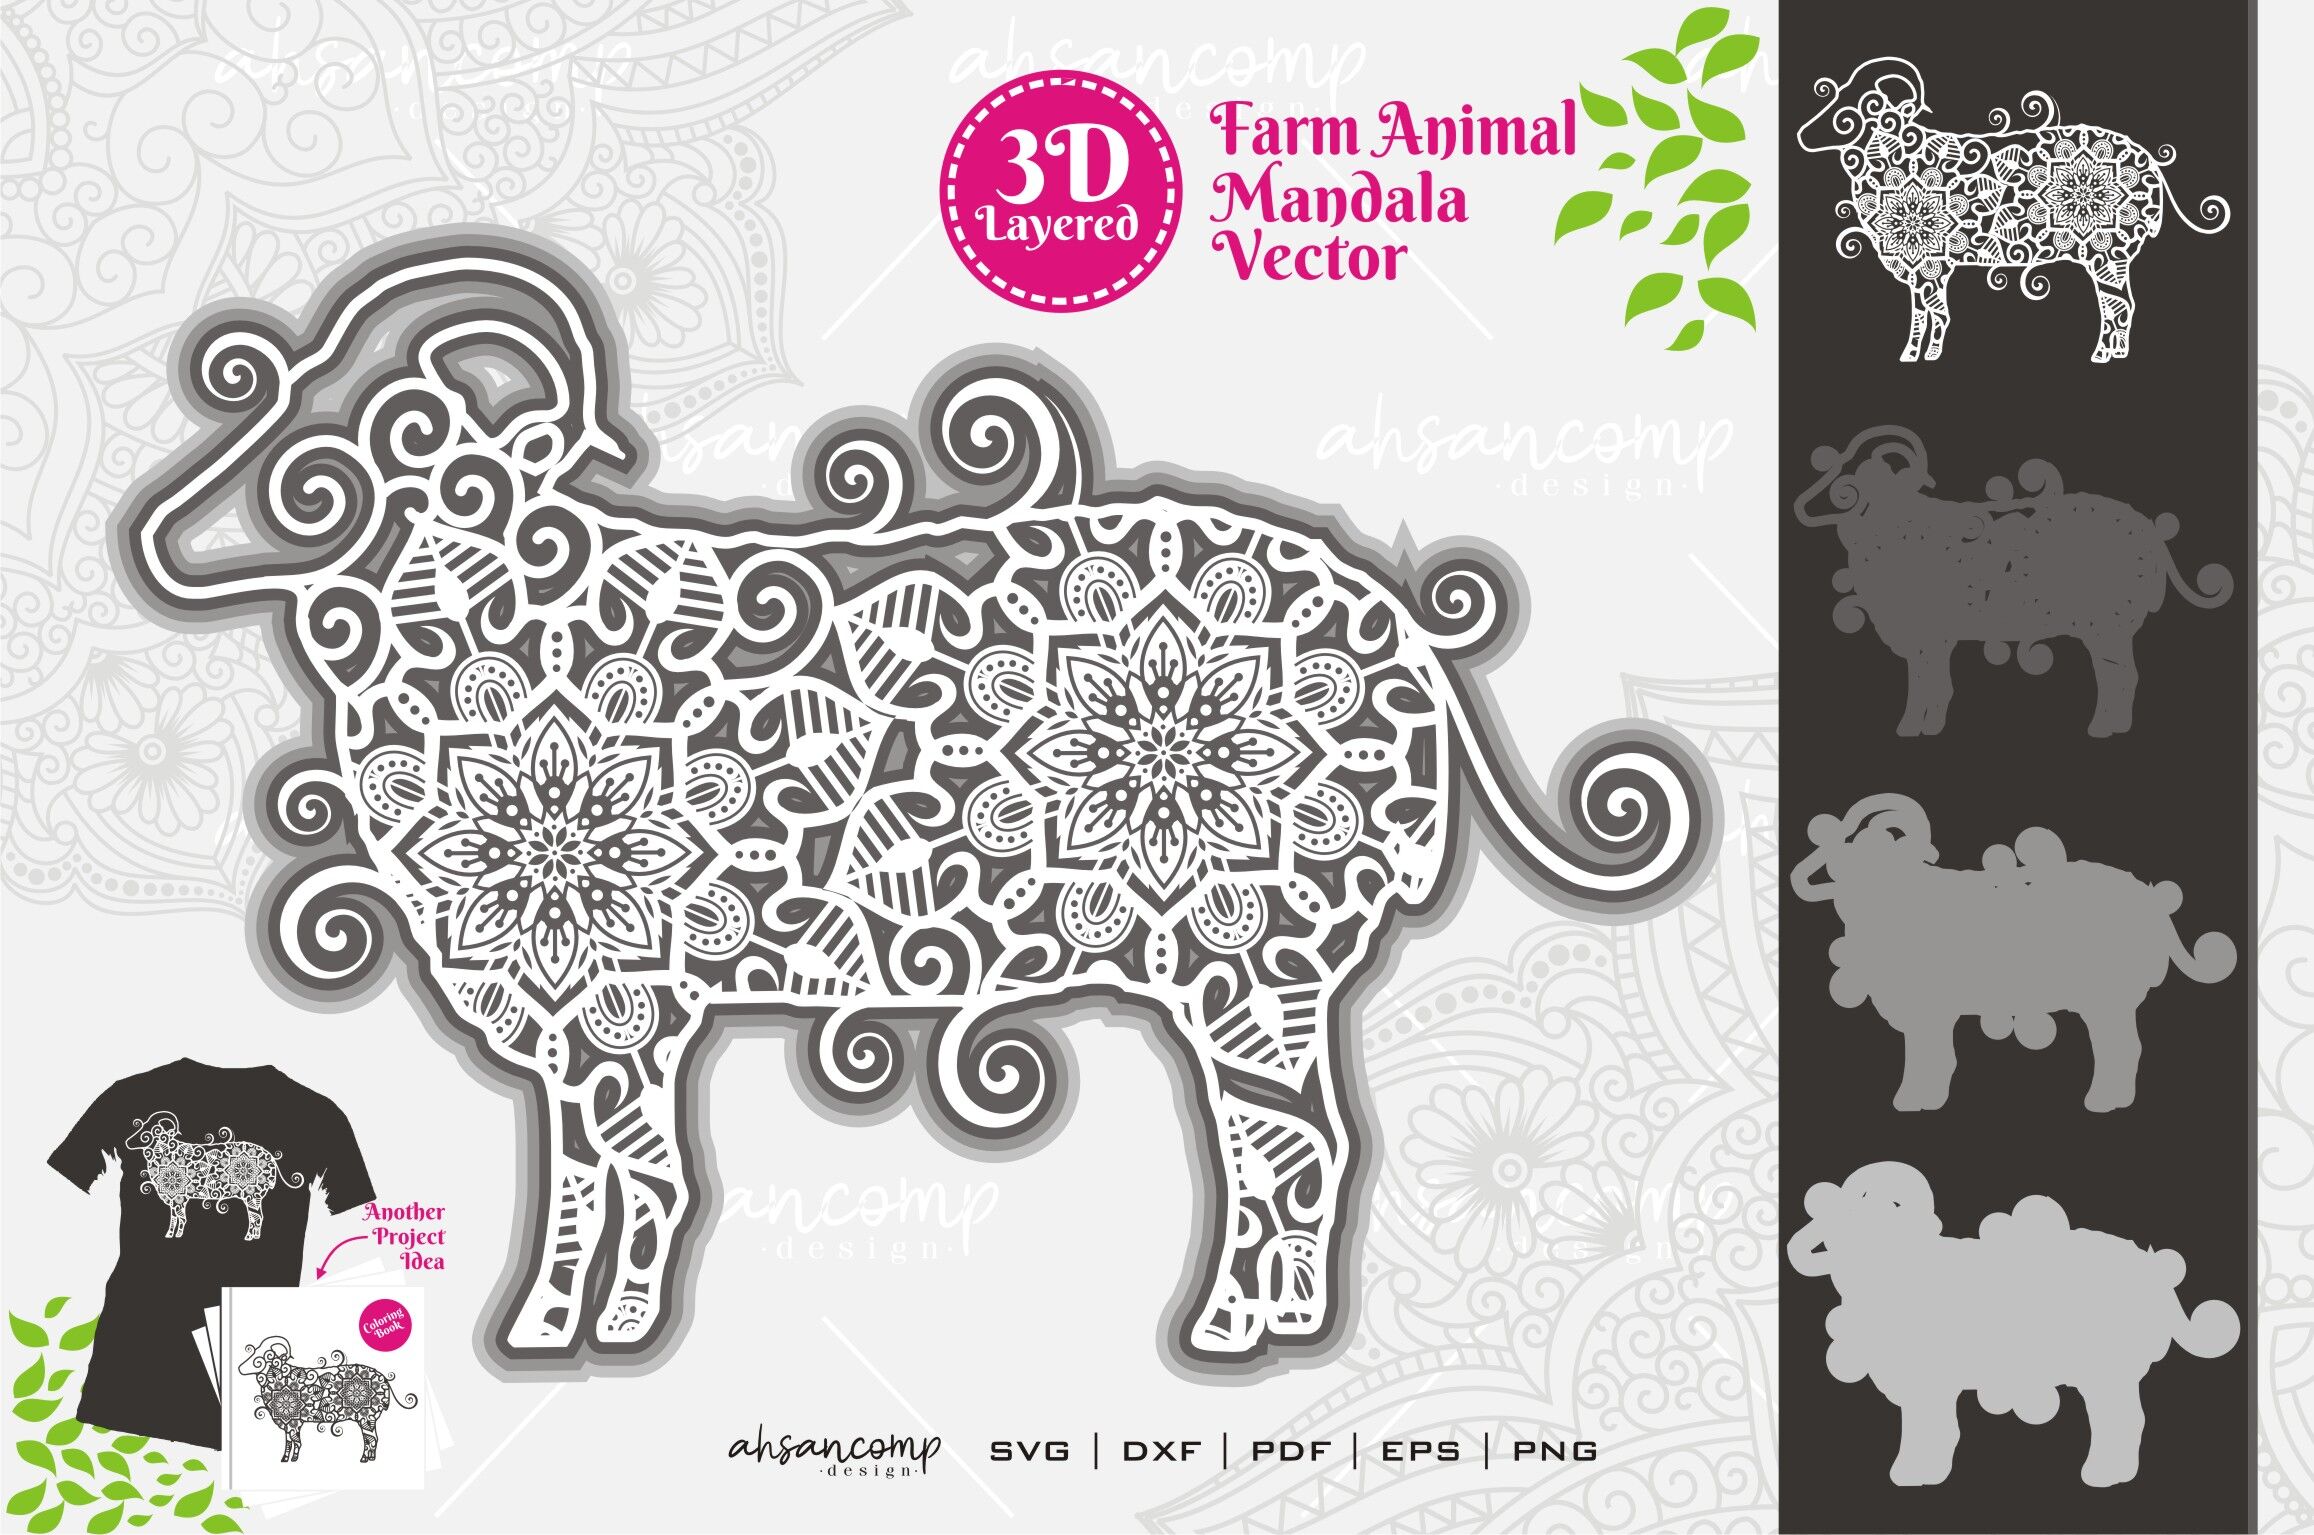 Download Farm Animal Mandala Svg 3d Layered 7 By Ahsancomp Studio Thehungryjpeg Com